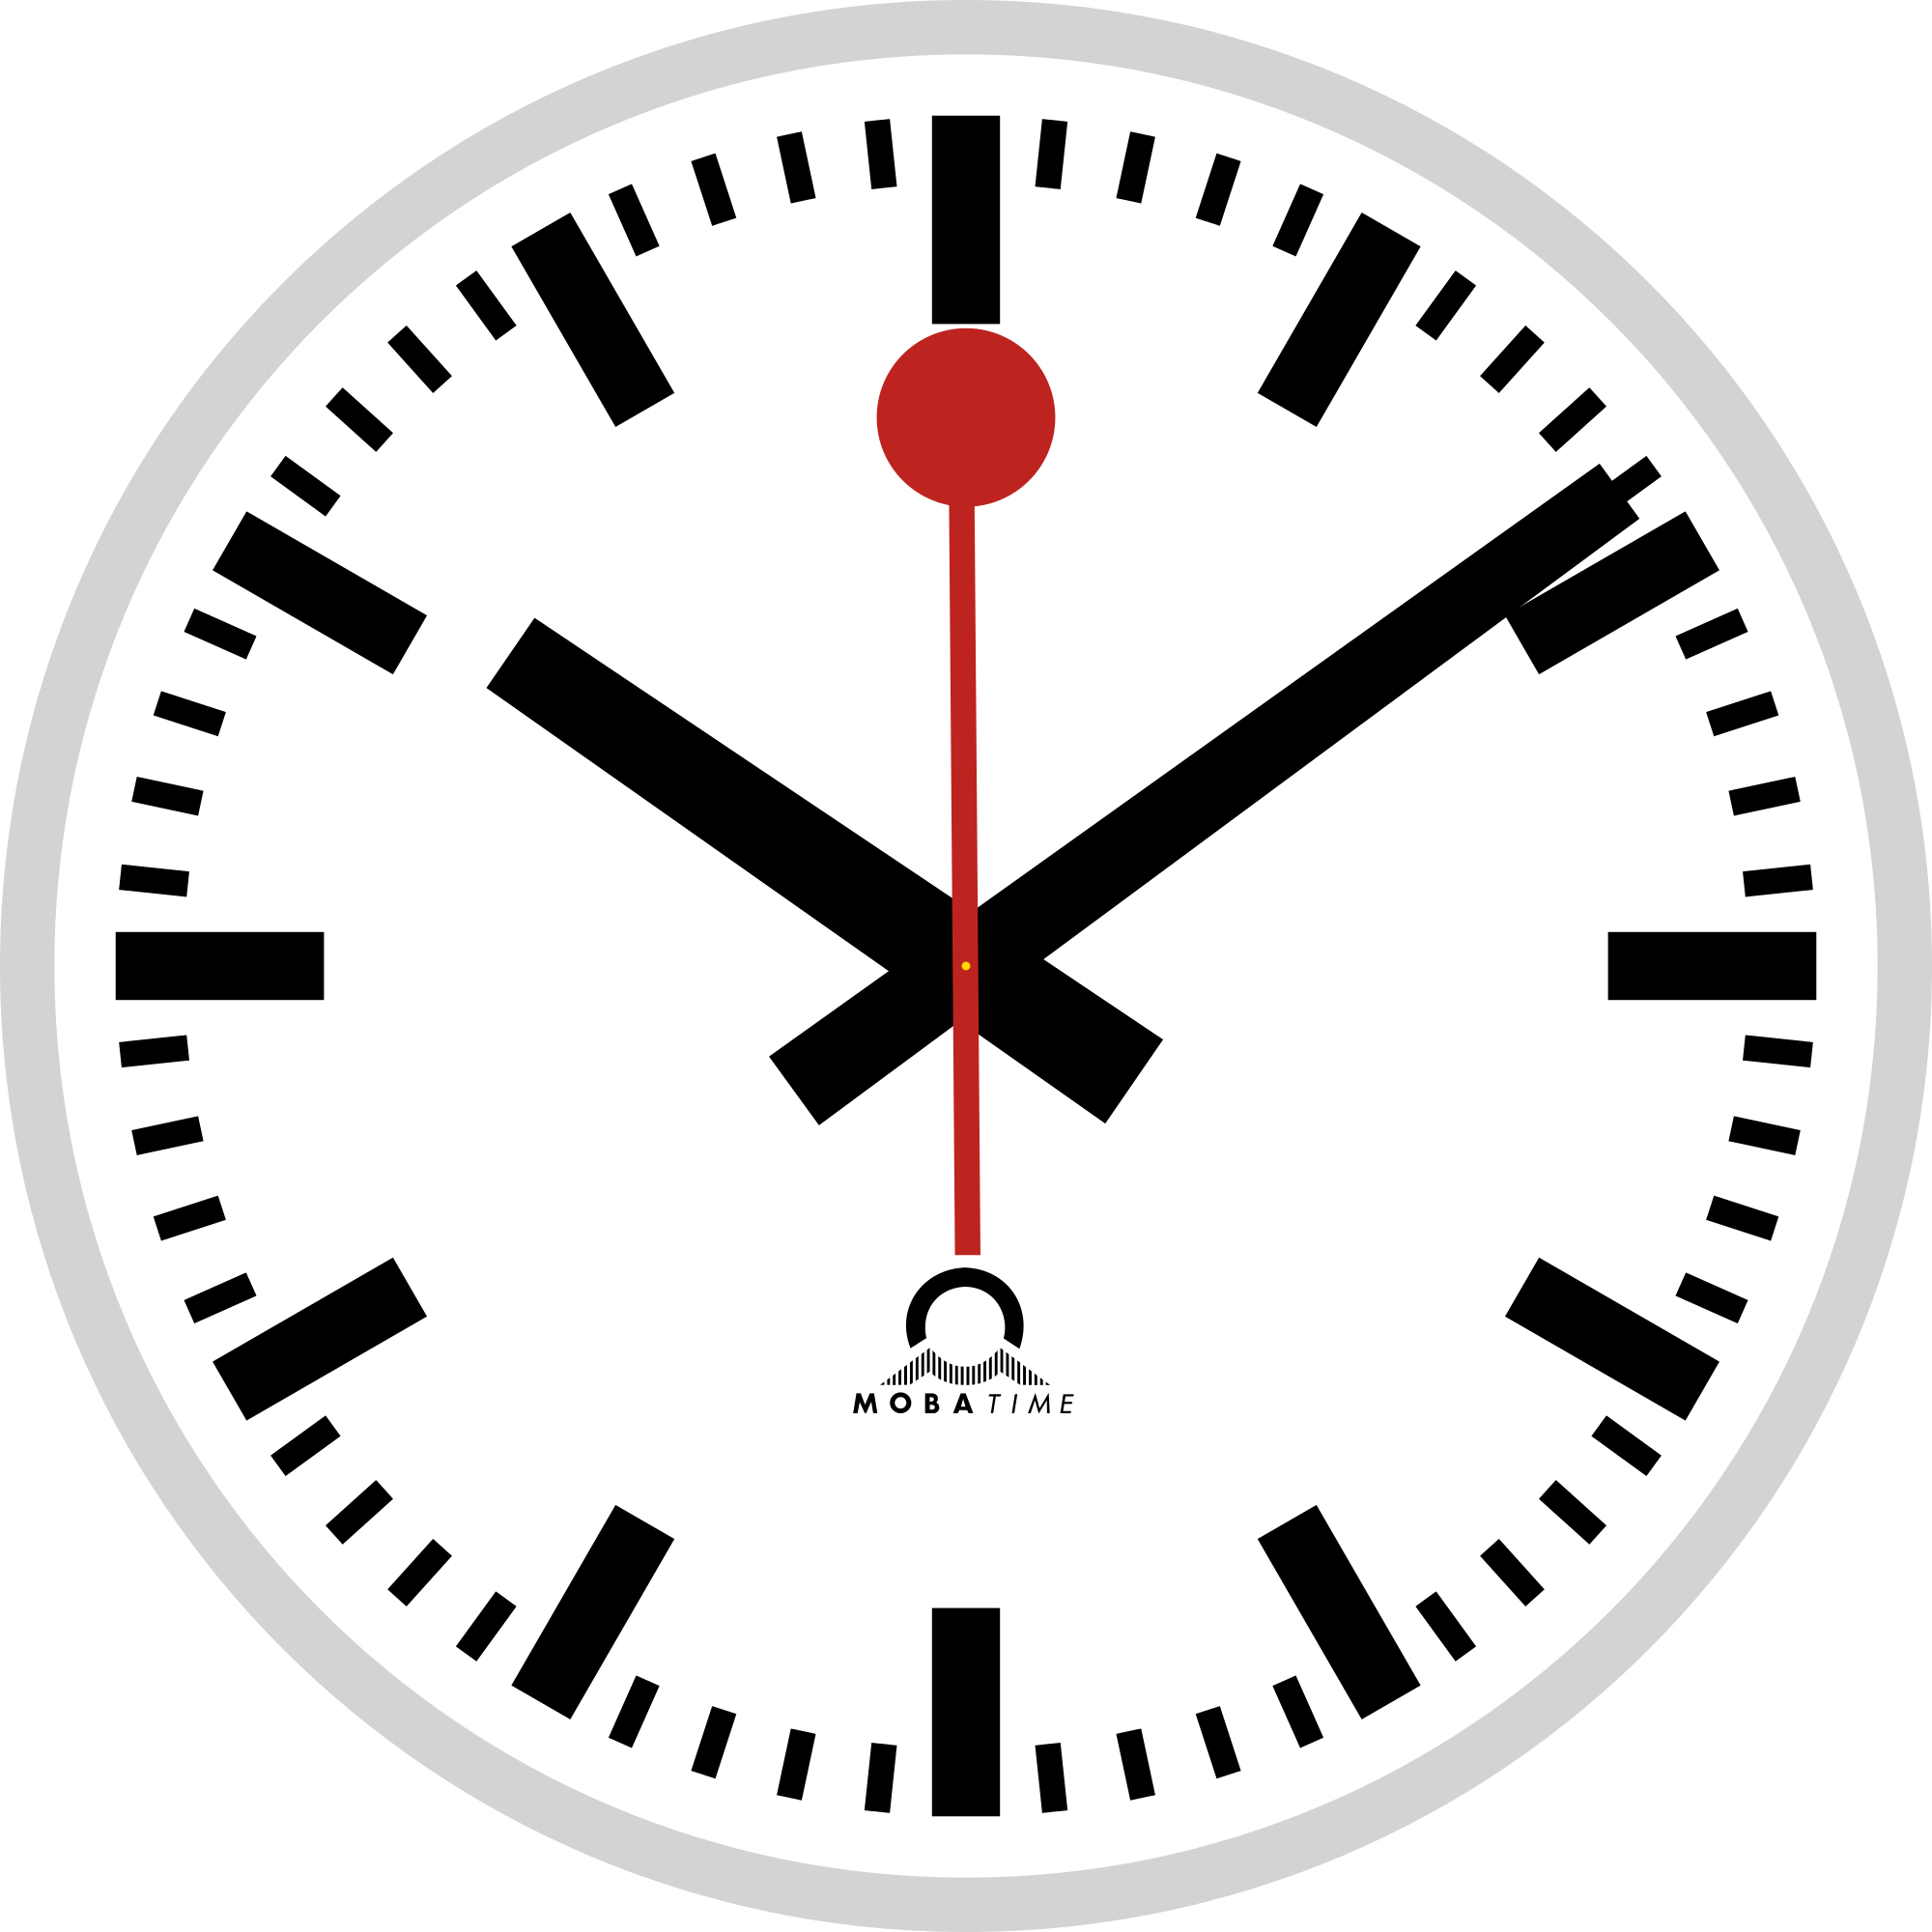 File:Swiss railway clock 1.svg - Wikimedia Commons